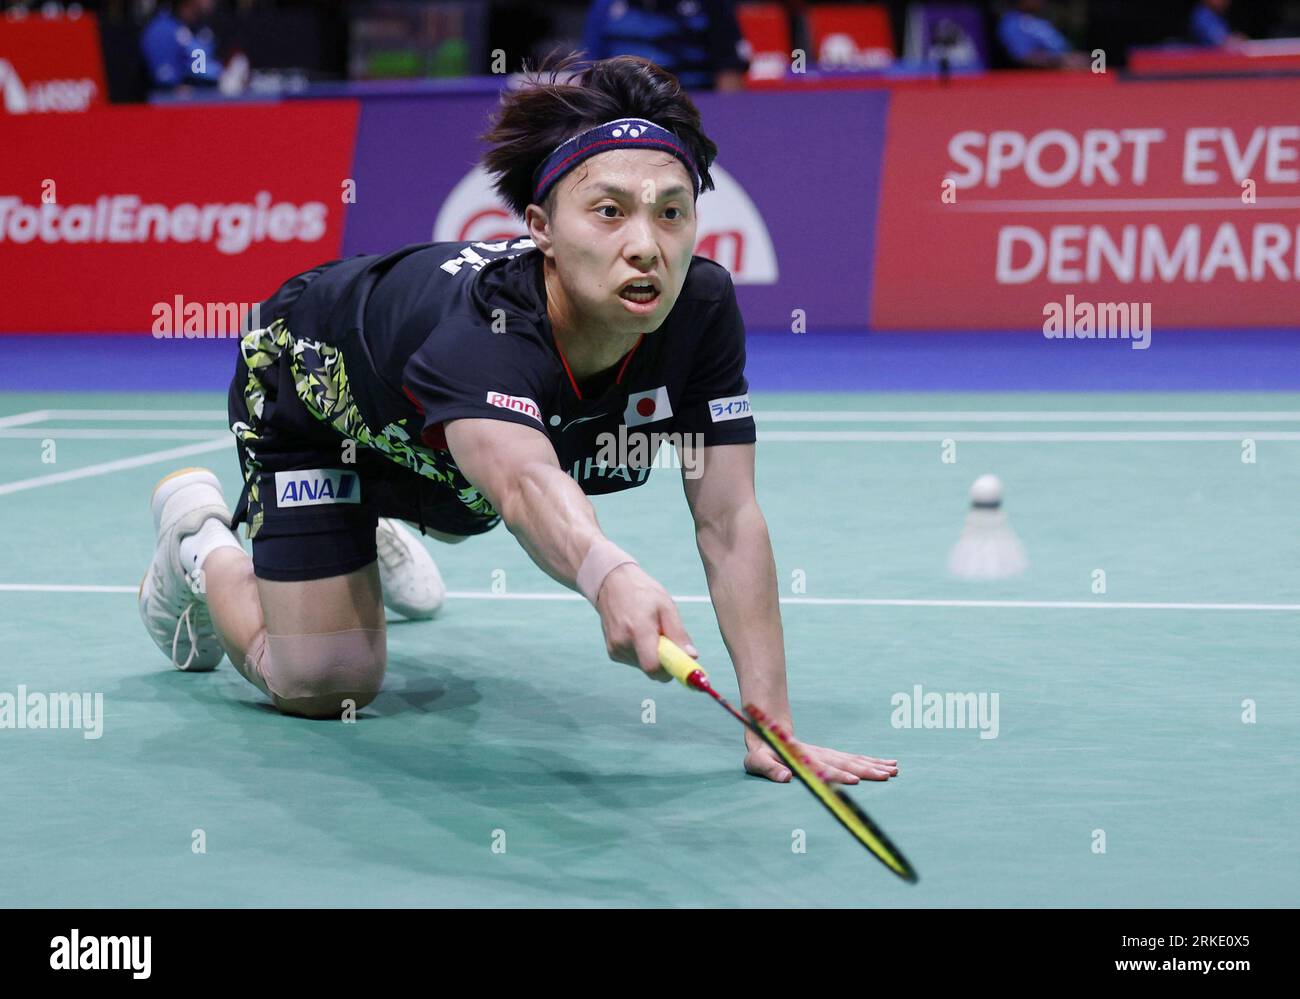 Kodai Naraoka, du Japon, se met à genoux lors d'un match de ...